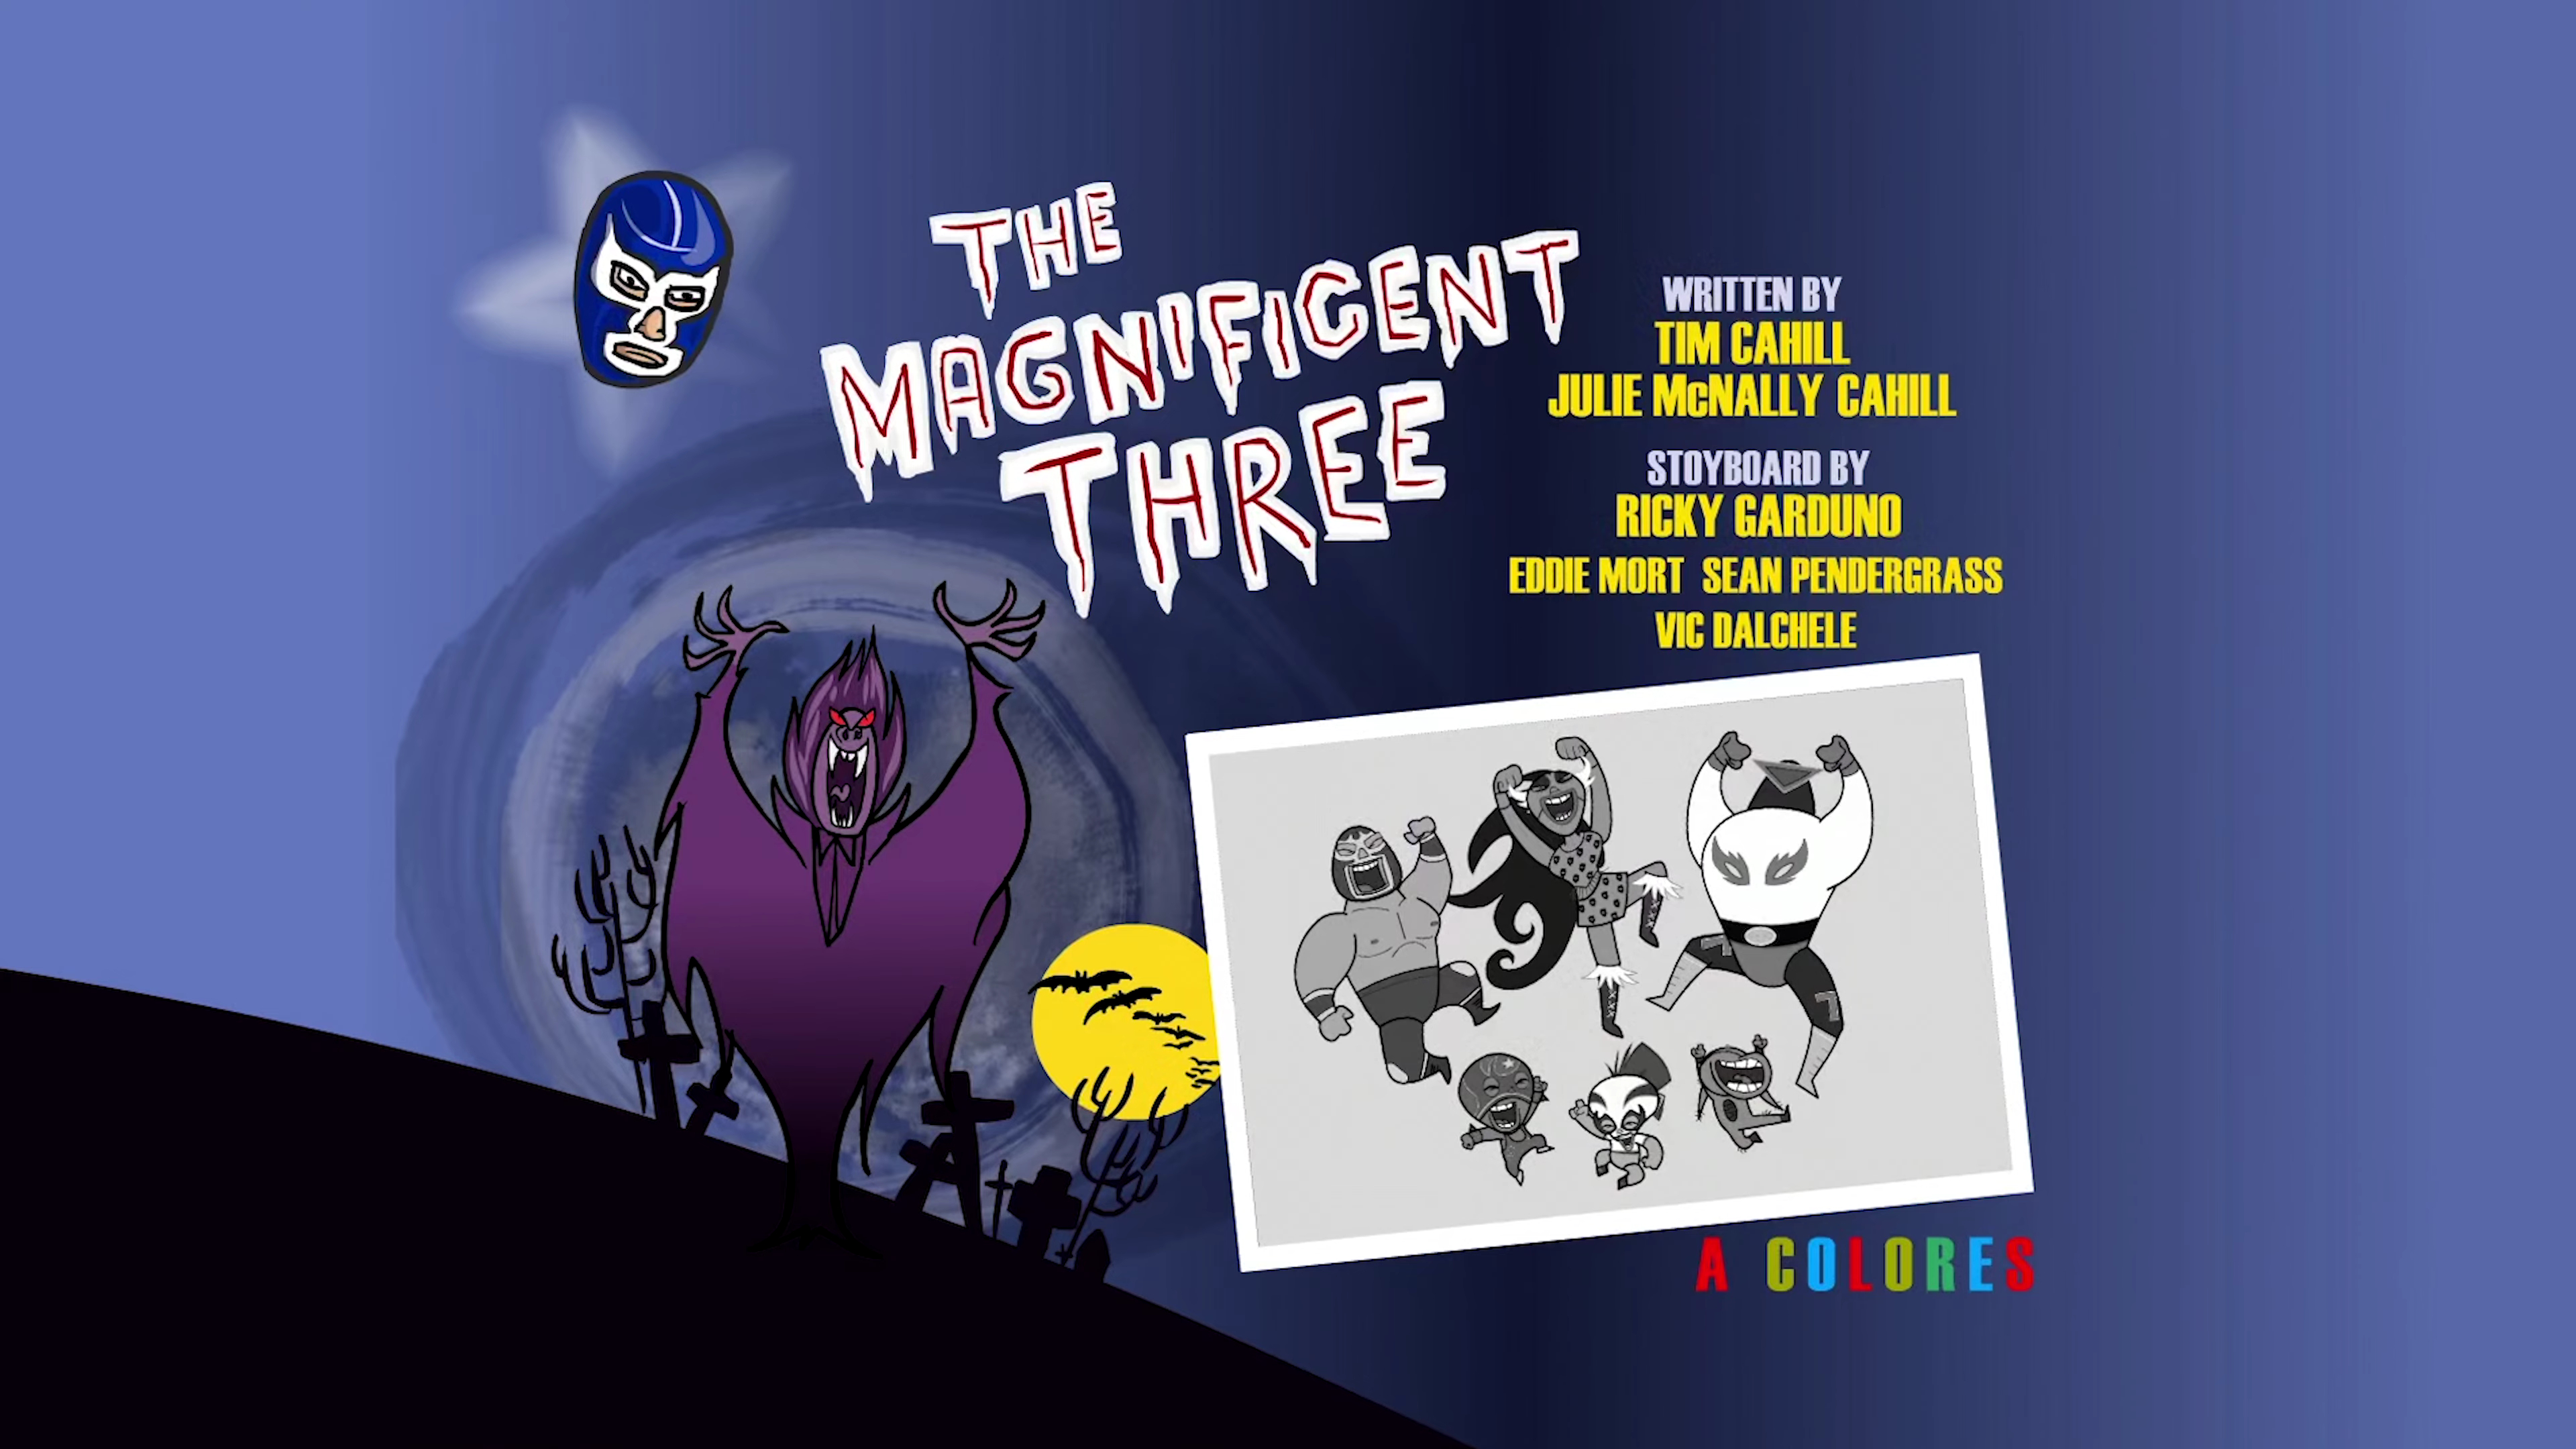 The Masknificent Three